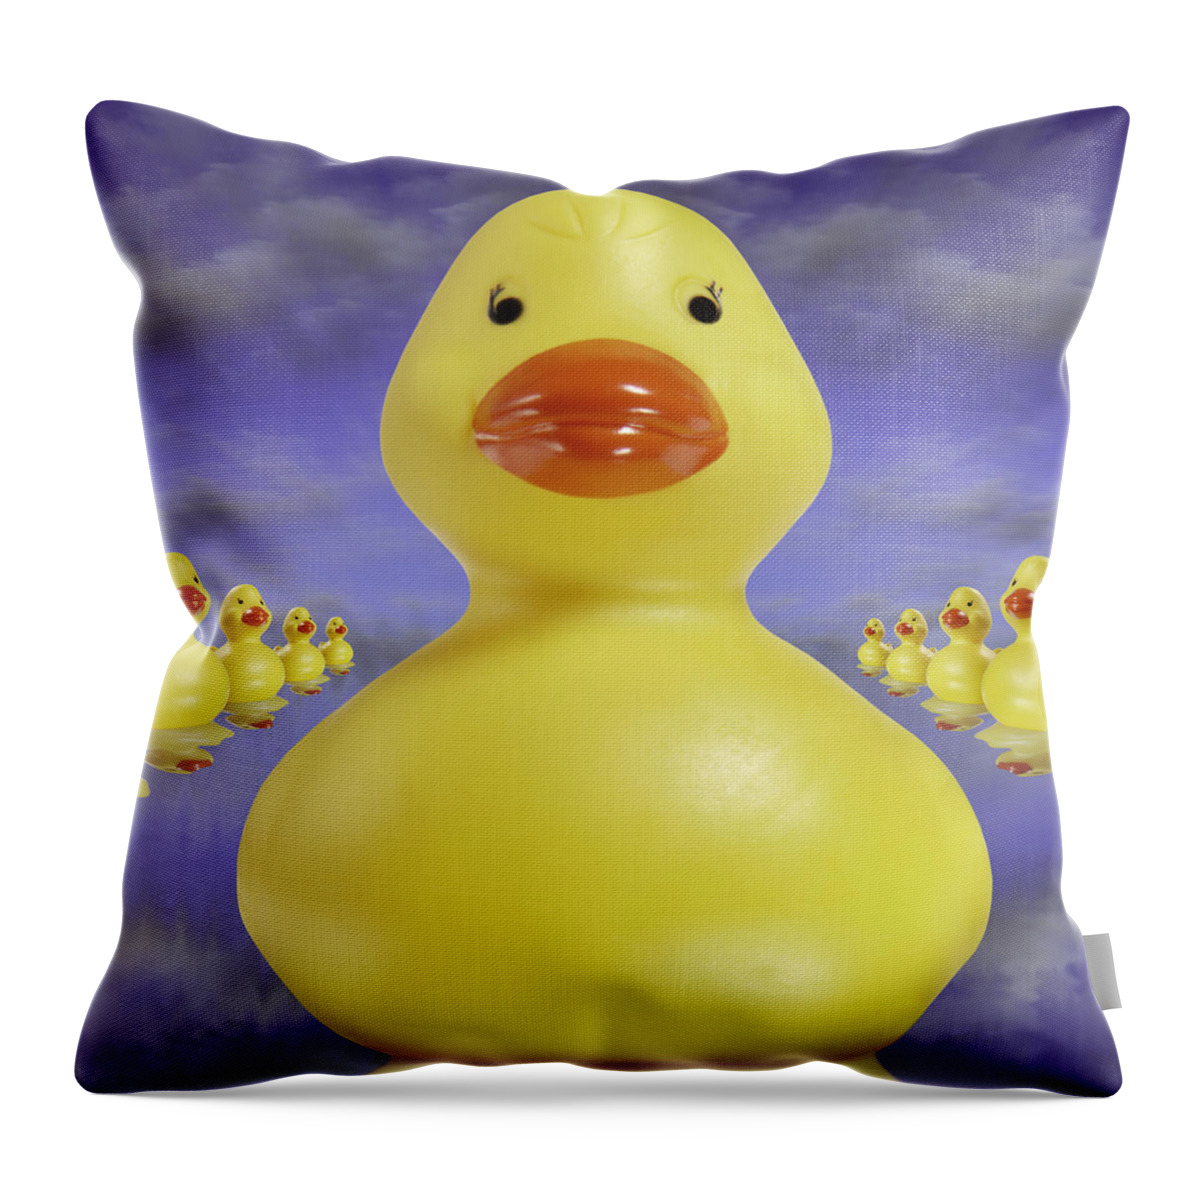 Fun Art Throw Pillow featuring the photograph Ducks In A Row 3 by Mike McGlothlen